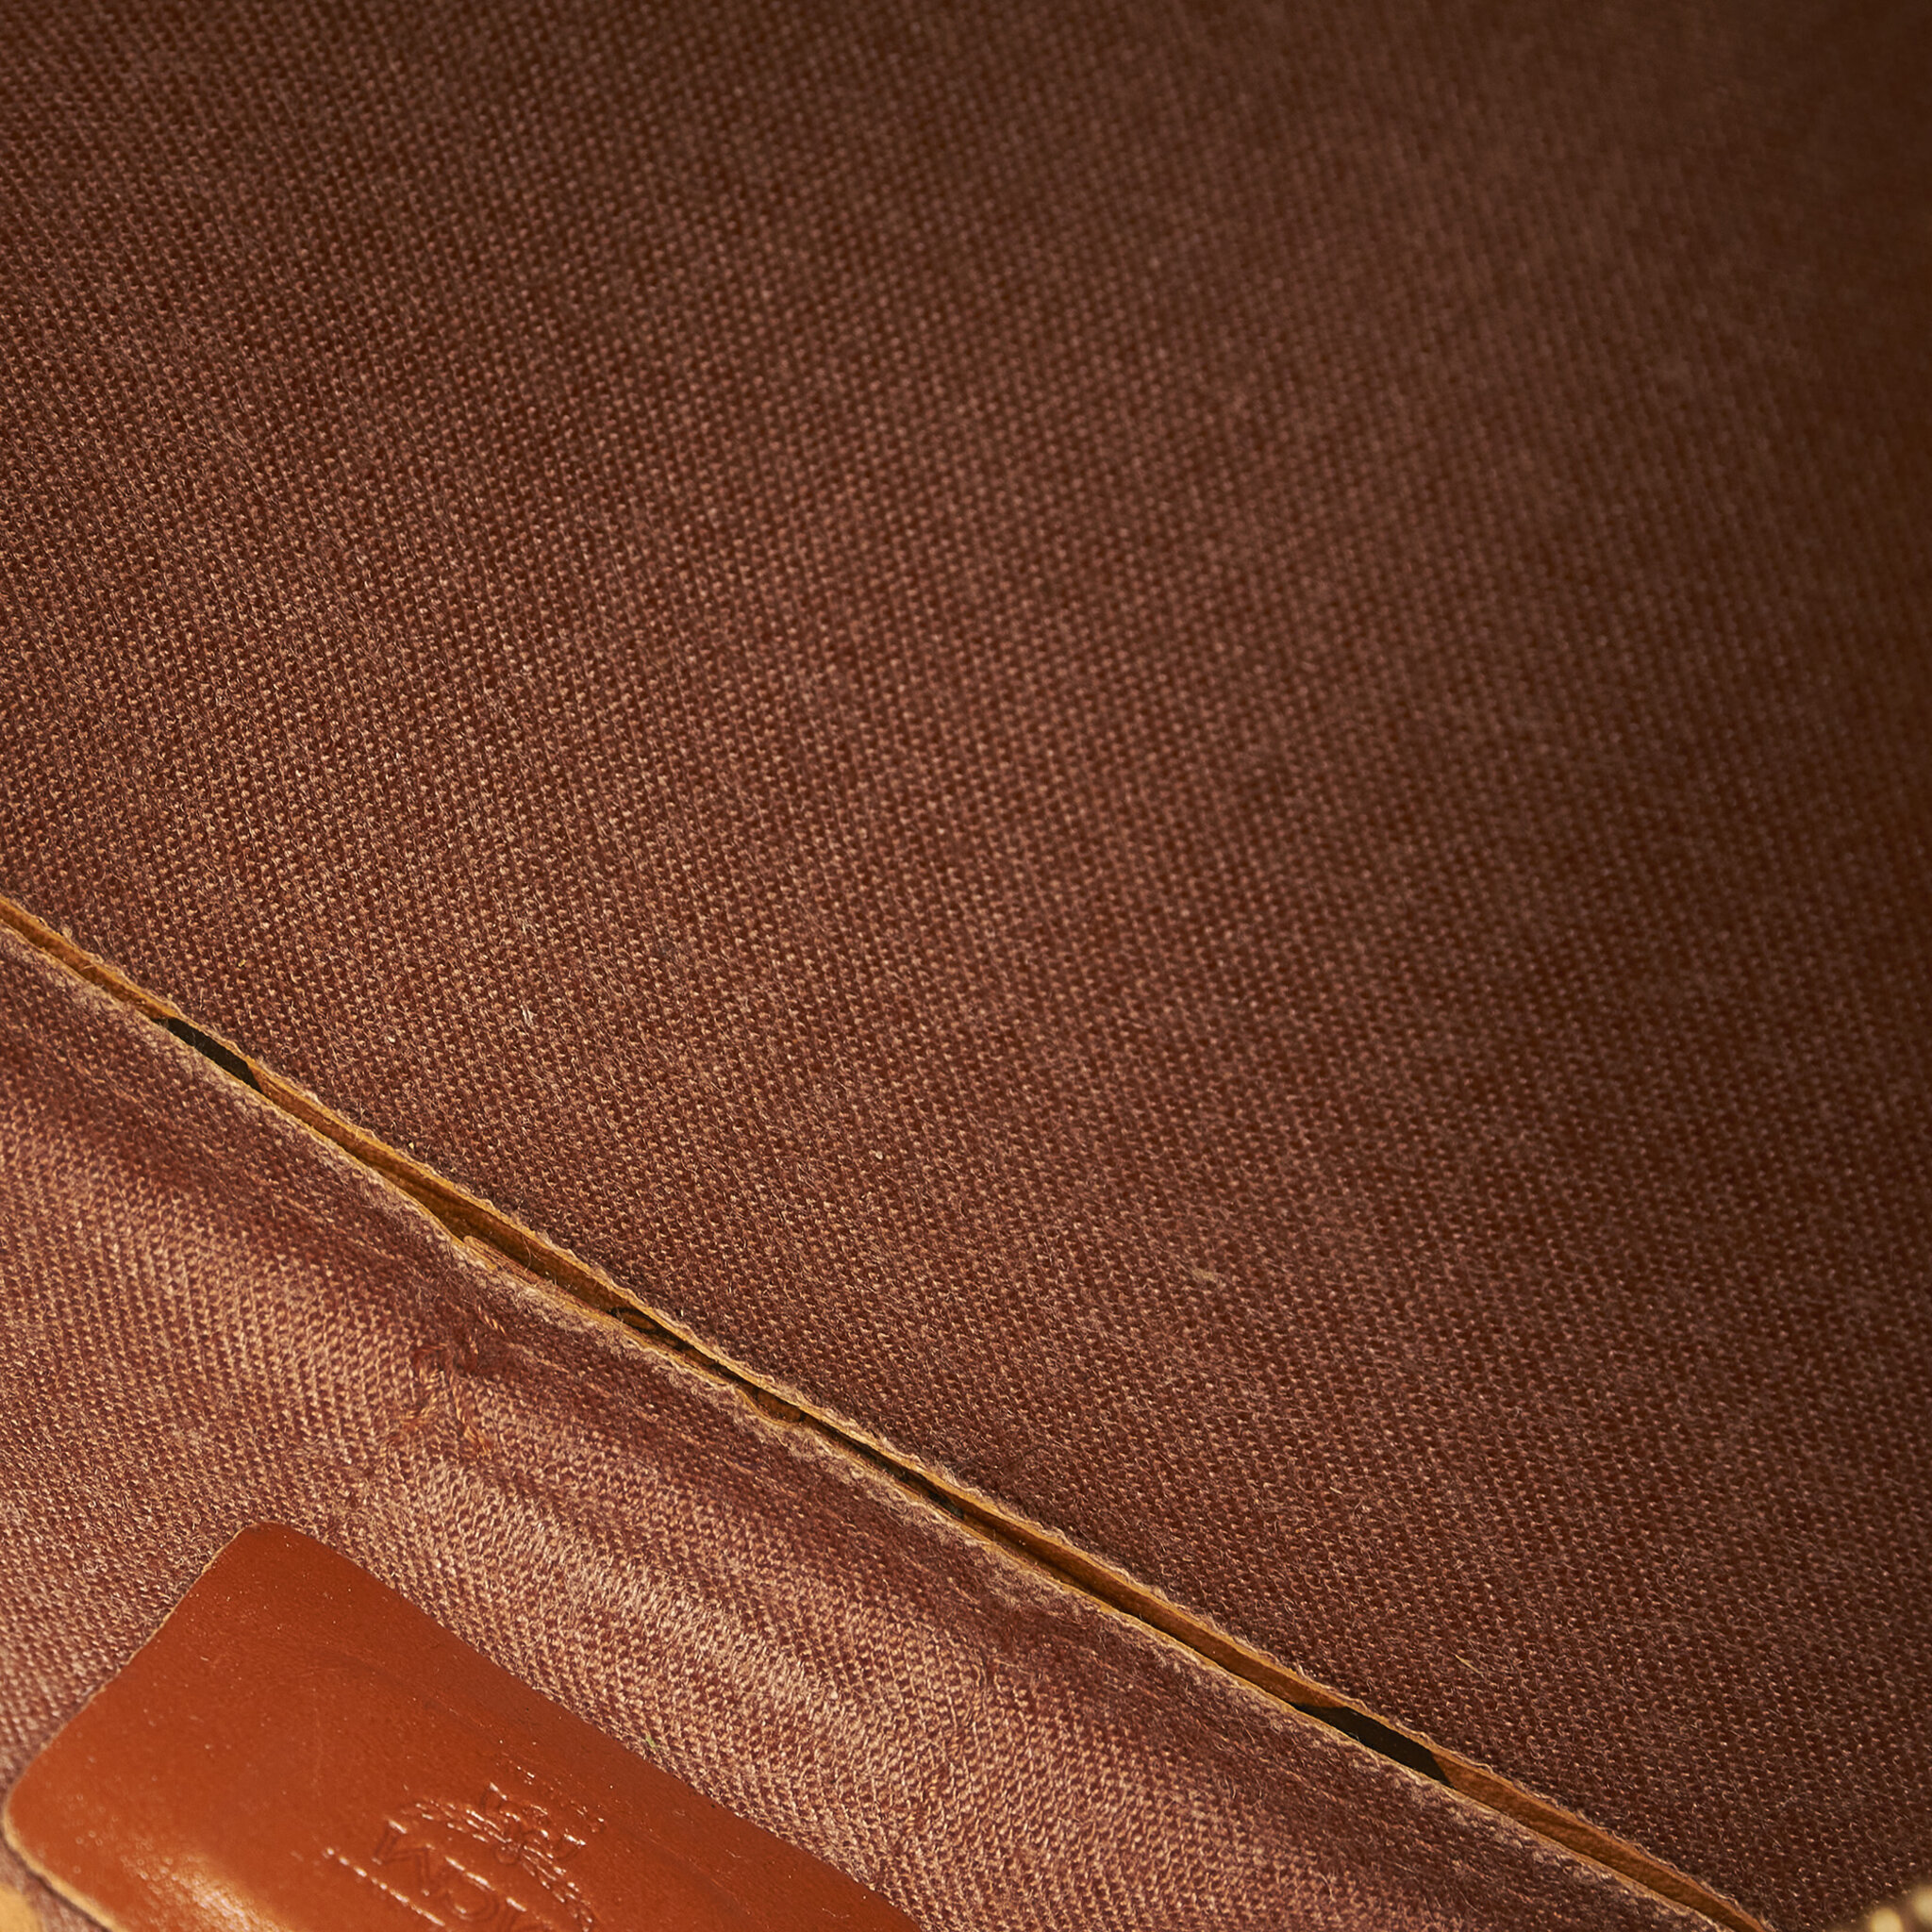 Mcm Visetos Leather Belt Bag, ONESIZE, brown